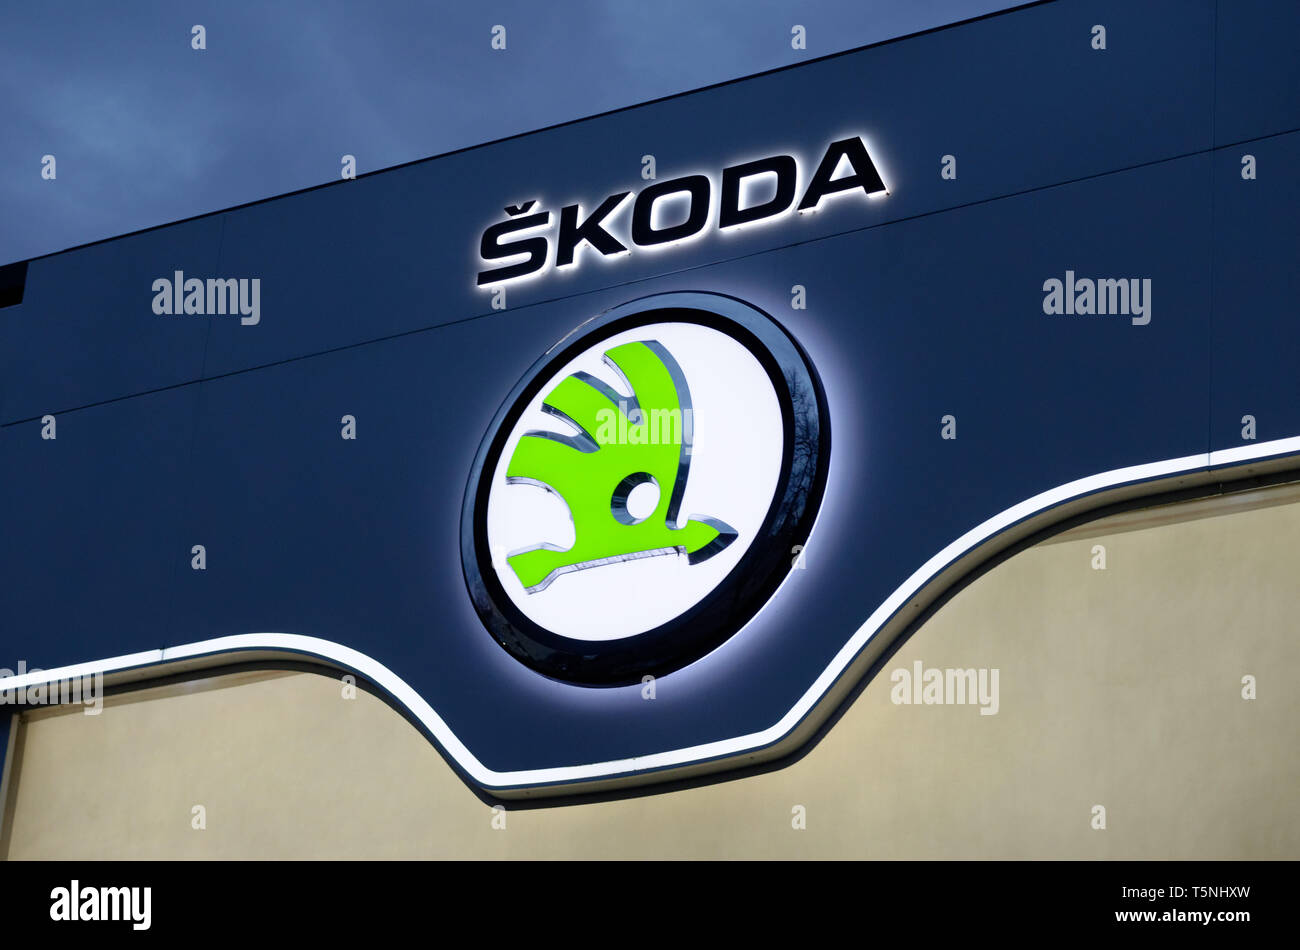 Skoda car company logo on dealership building Stock Photo